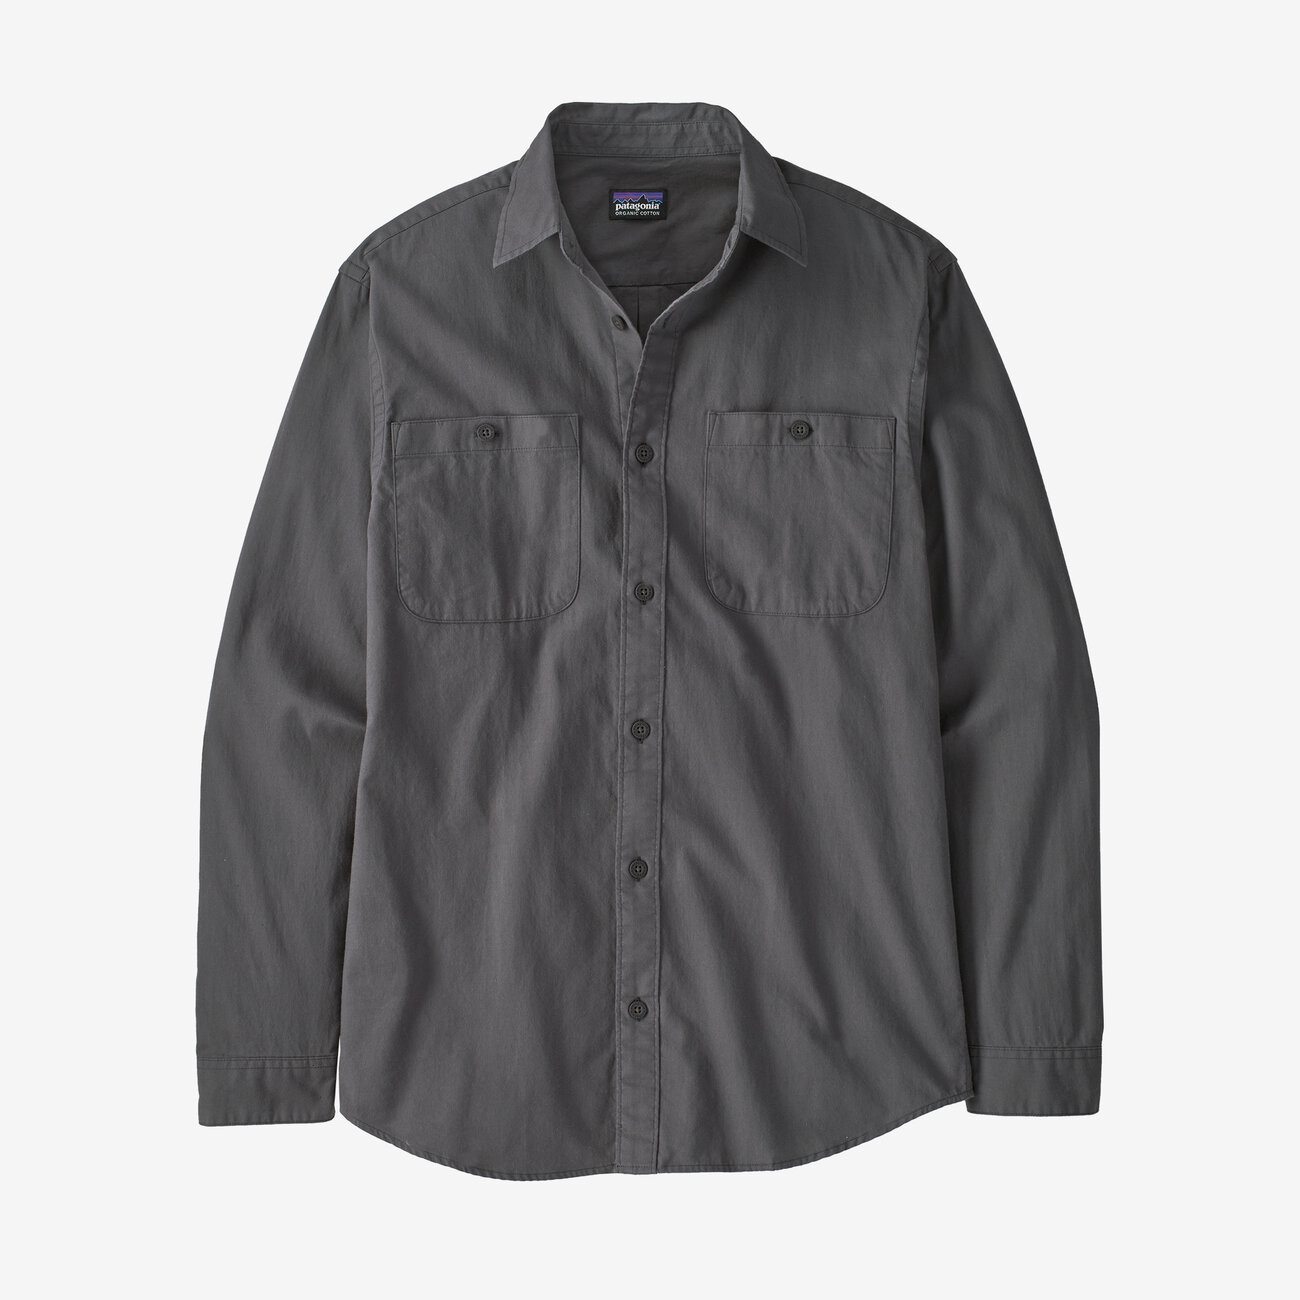 Patagonia M's L/S Pima Cotton Shirt - Forge Grey - Large